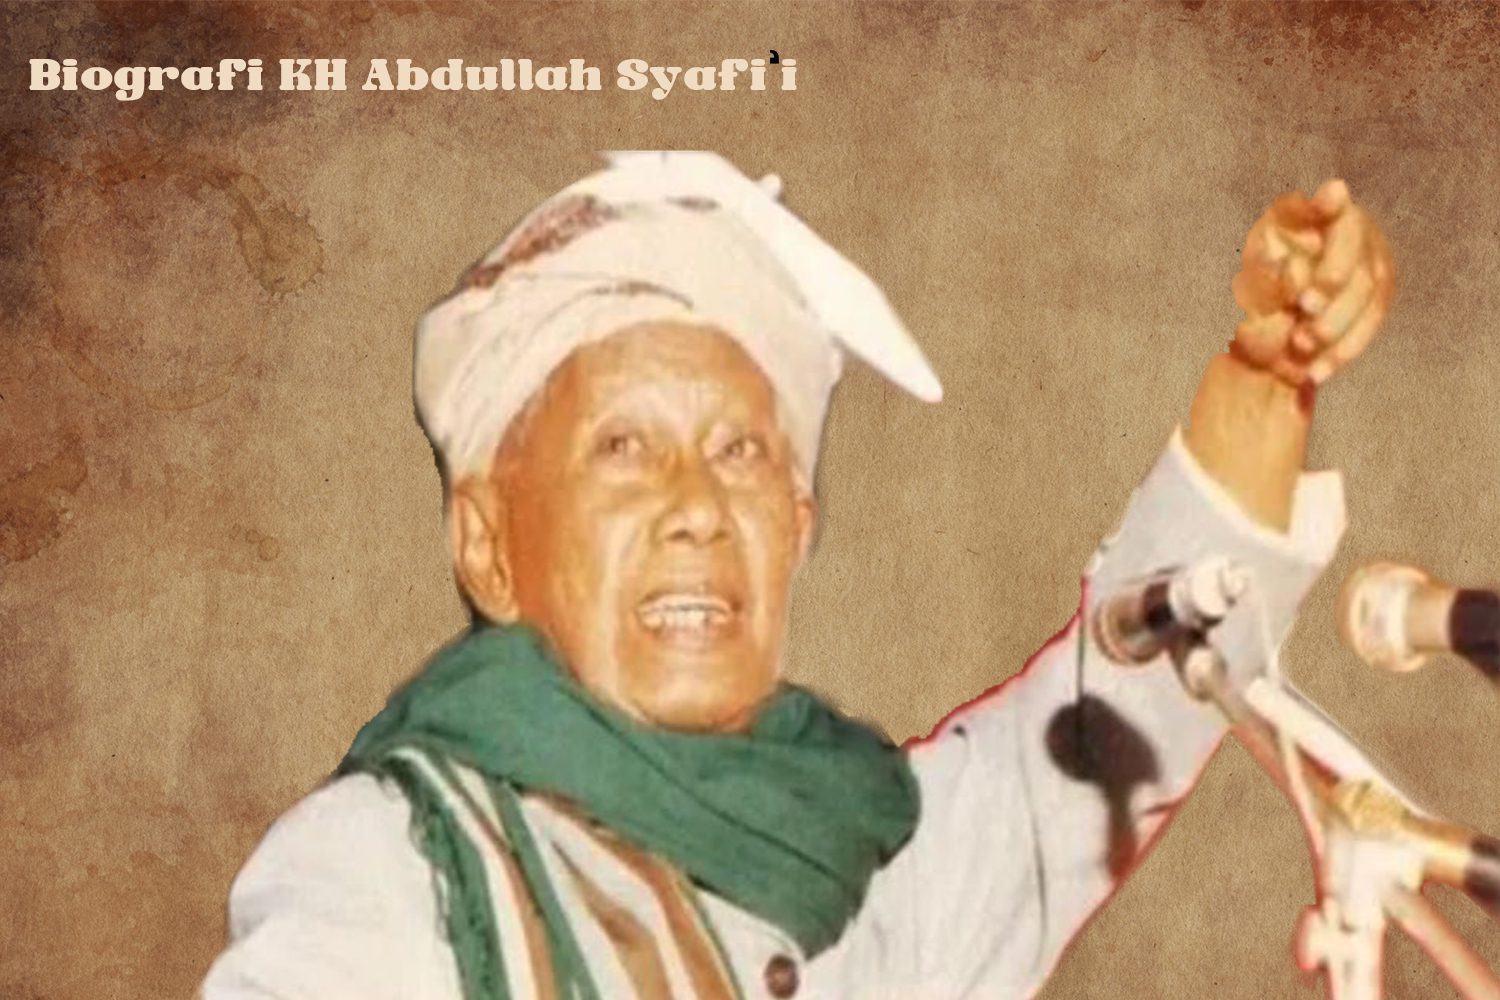 Biografi KH Abdullah Syafi’i (1910-1985), Ulama yang Dijuluki Singa Podium Dari Betawi